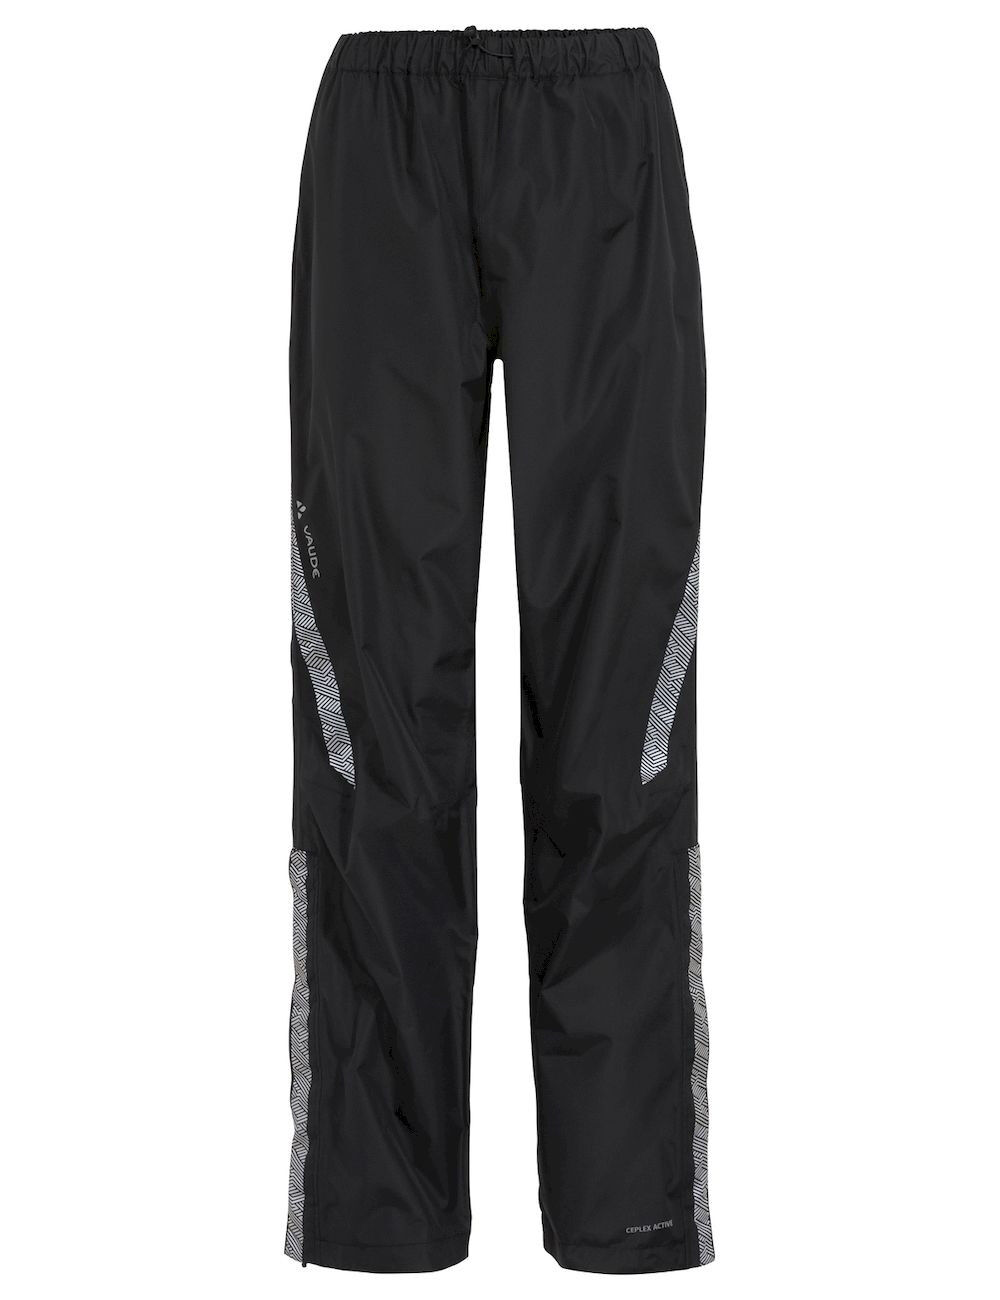 Vaude Luminum Pants II - Pantalones impermeables para ciclismo - Mujer